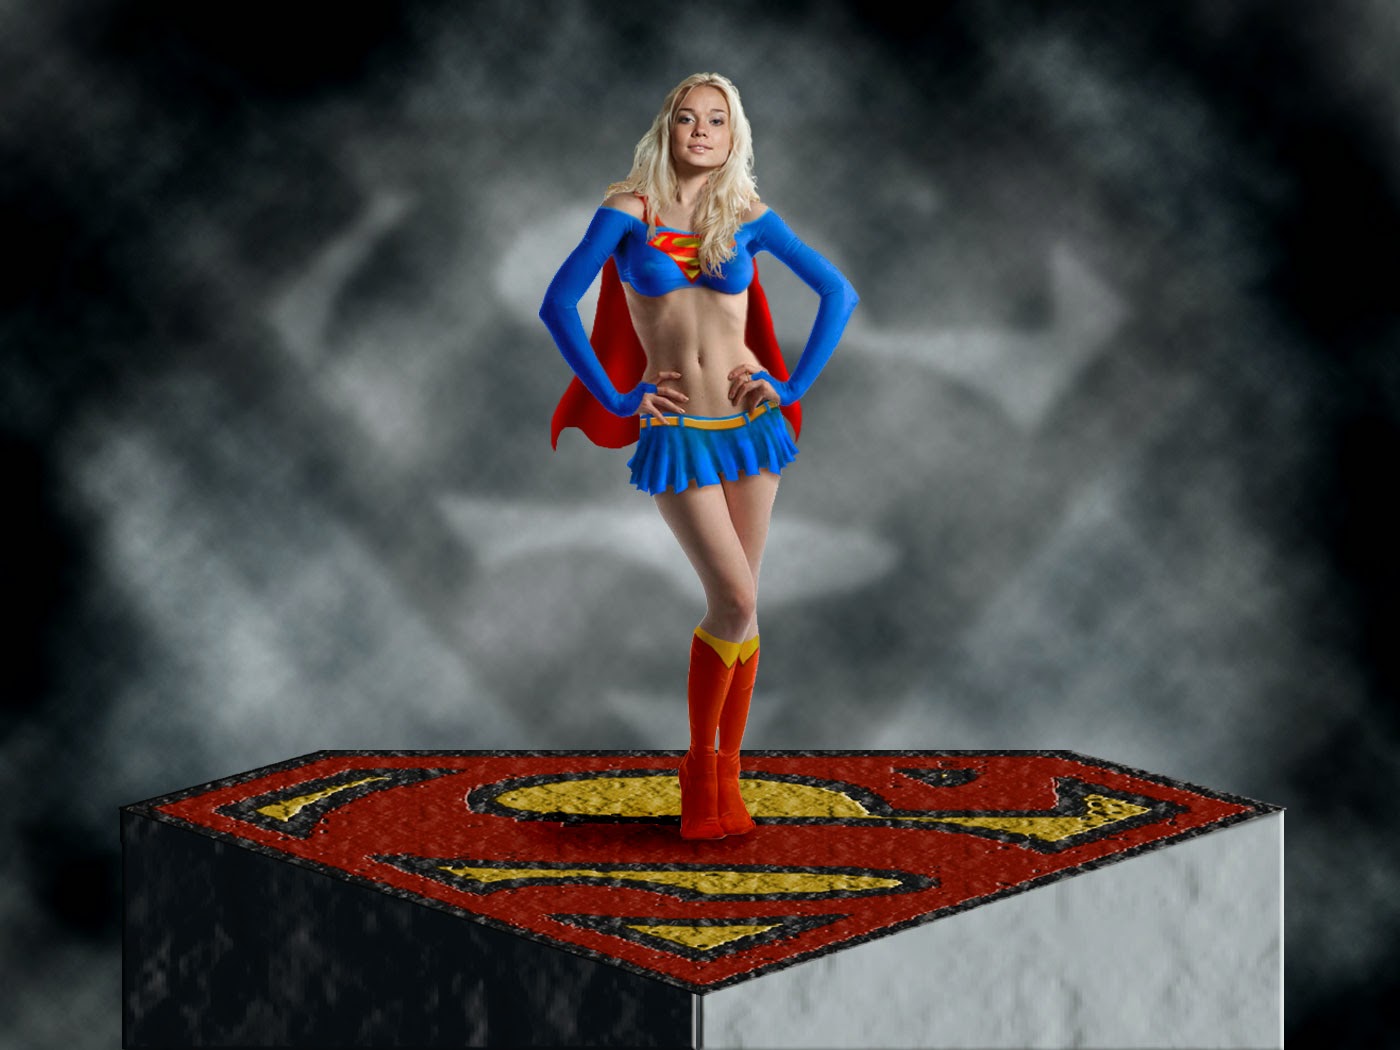 super hot wallpaper,superhero,action figure,fictional character,wonder woman,figurine